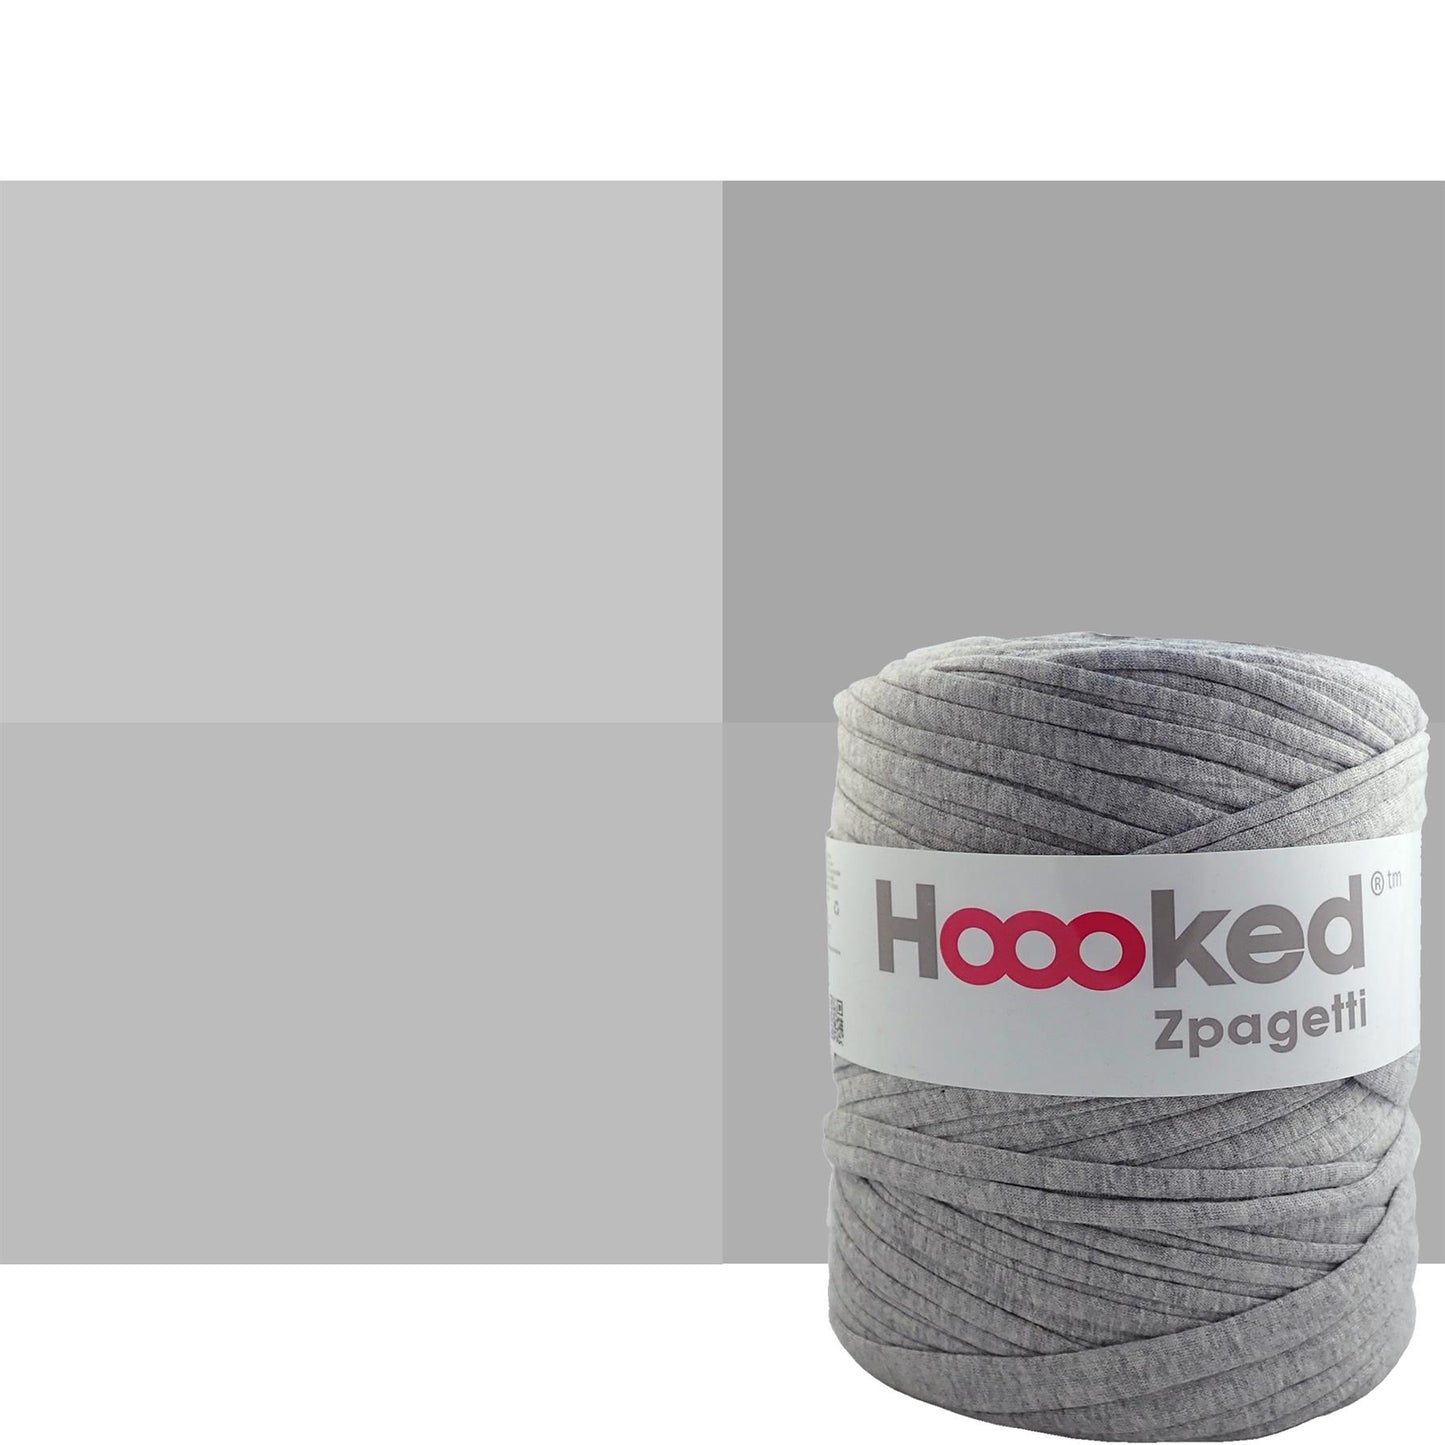 Hoooked Zpagetti Grey Cotton T-Shirt Yarn - 120M 700g